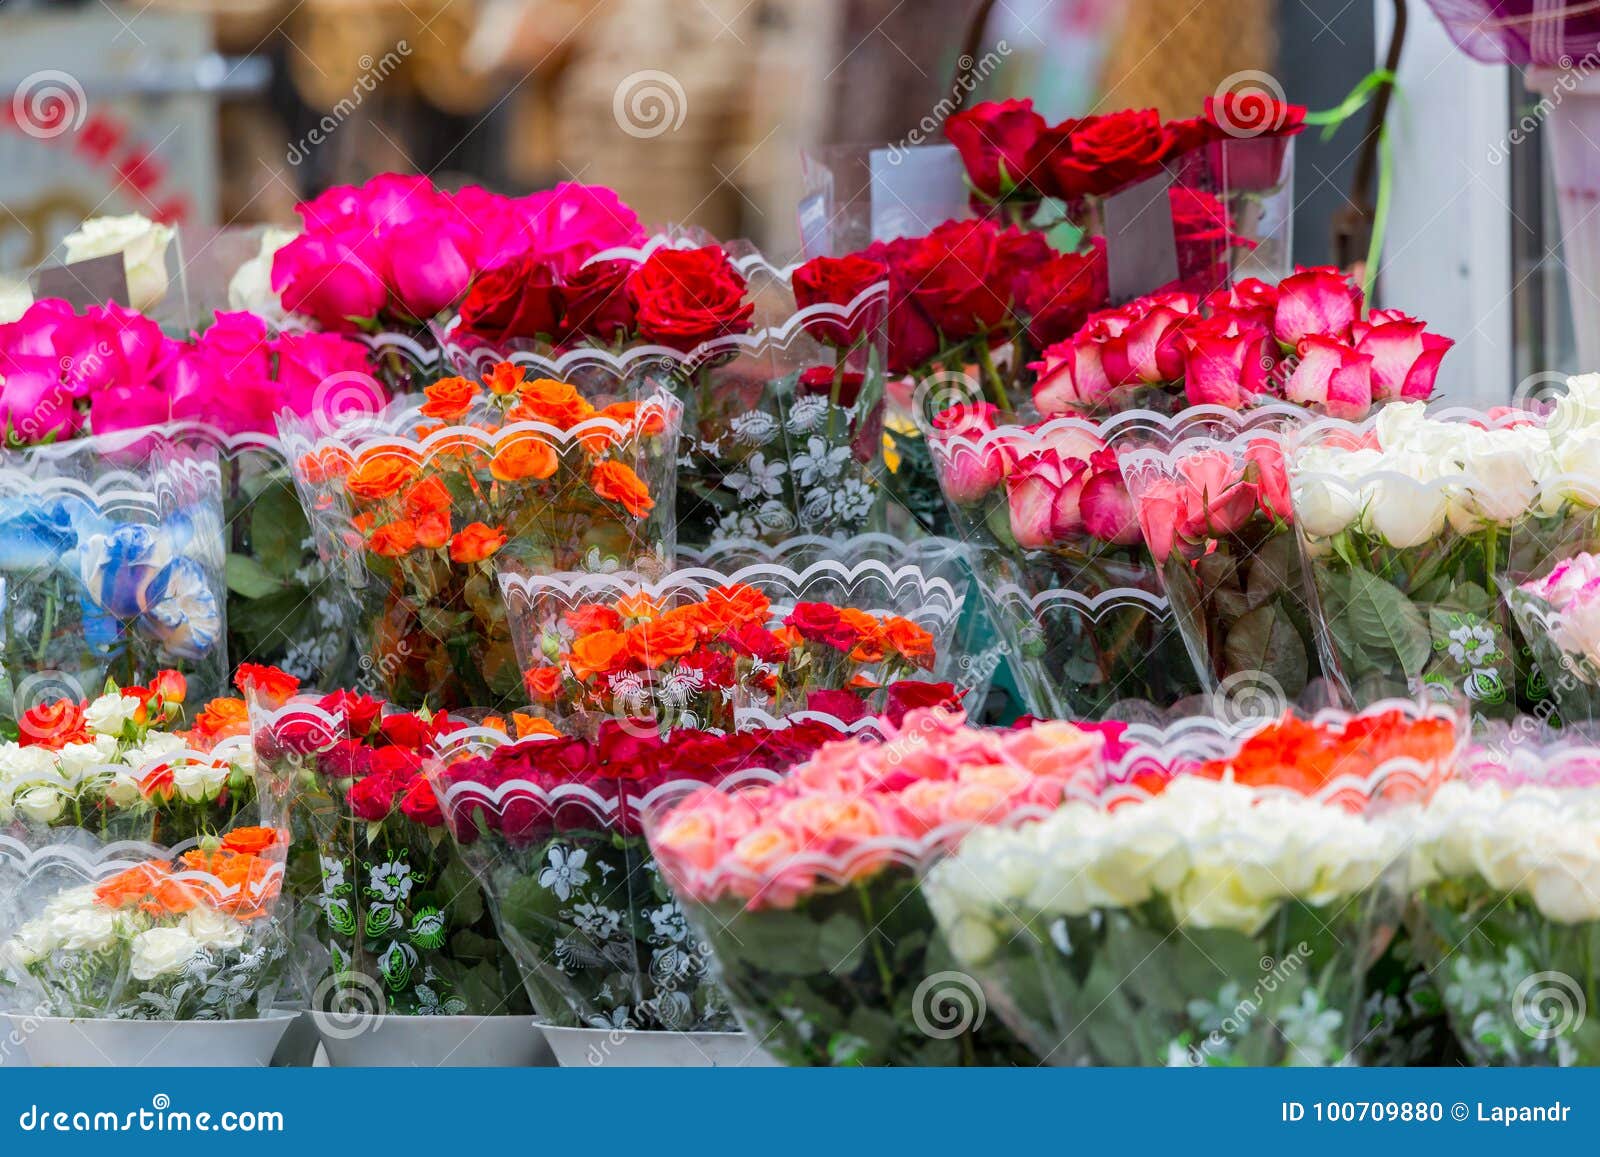 Bouquets Roses for Sale at Florist`s Shop on Street Flower Market